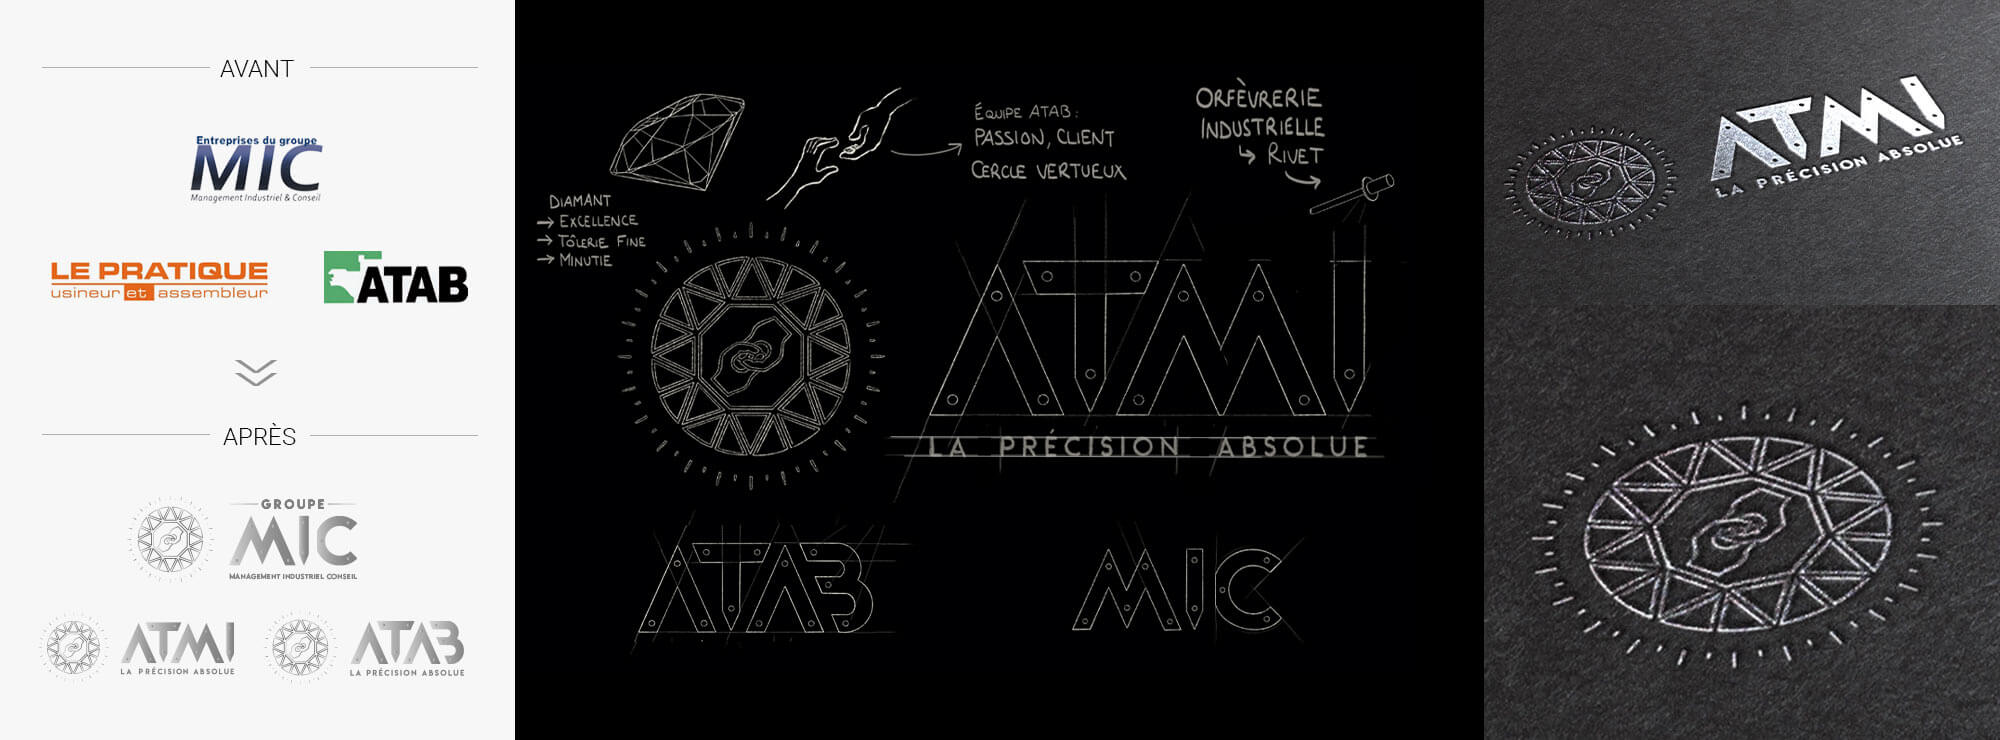 ATMI - A precision brand